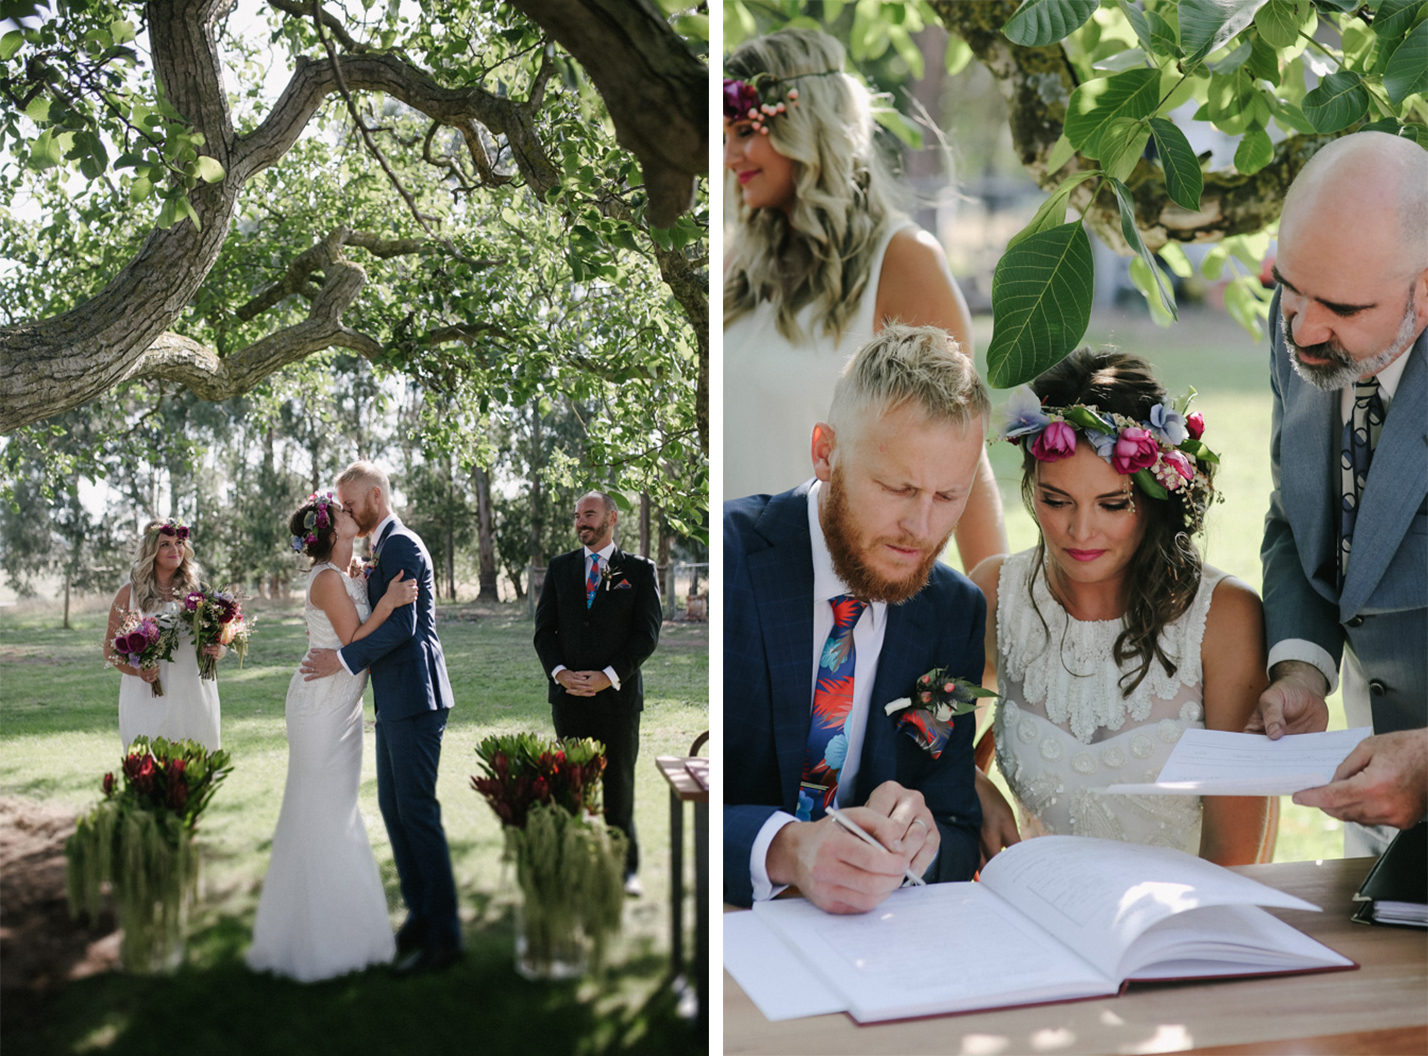 Melbourne's best wedding celebrant